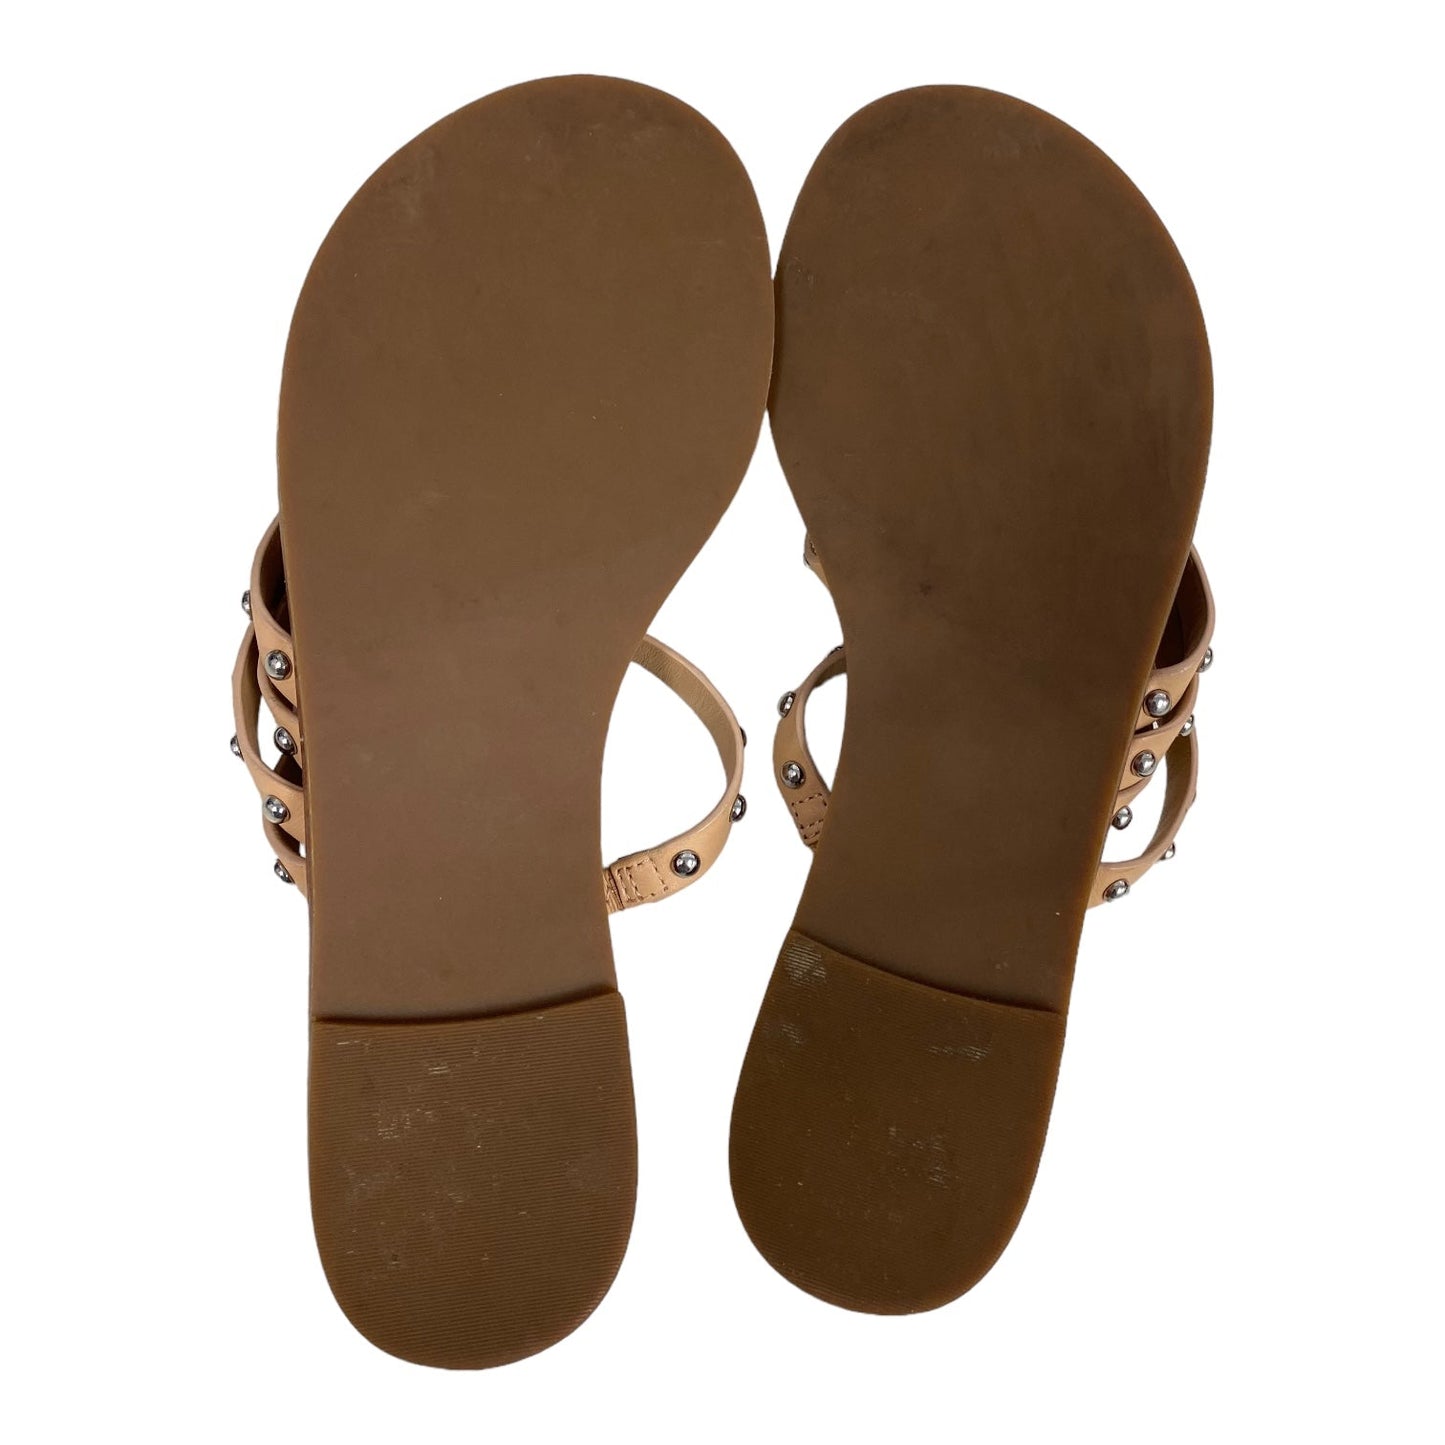 Tan Sandals Designer Tory Burch, Size 7